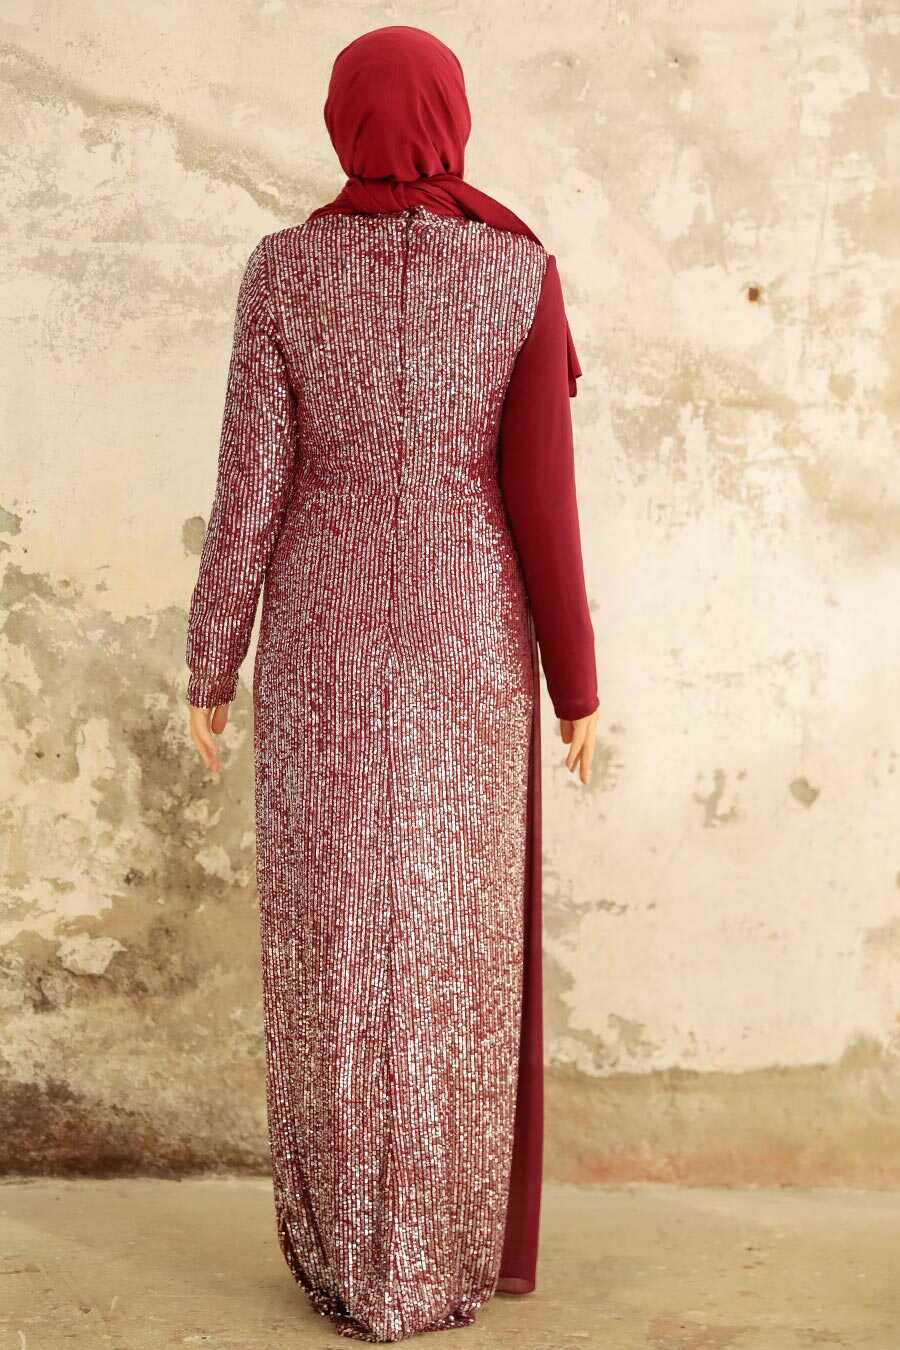 Neva Style - Long Sleeve Claret Red Islamic Prom Dress 25851BR